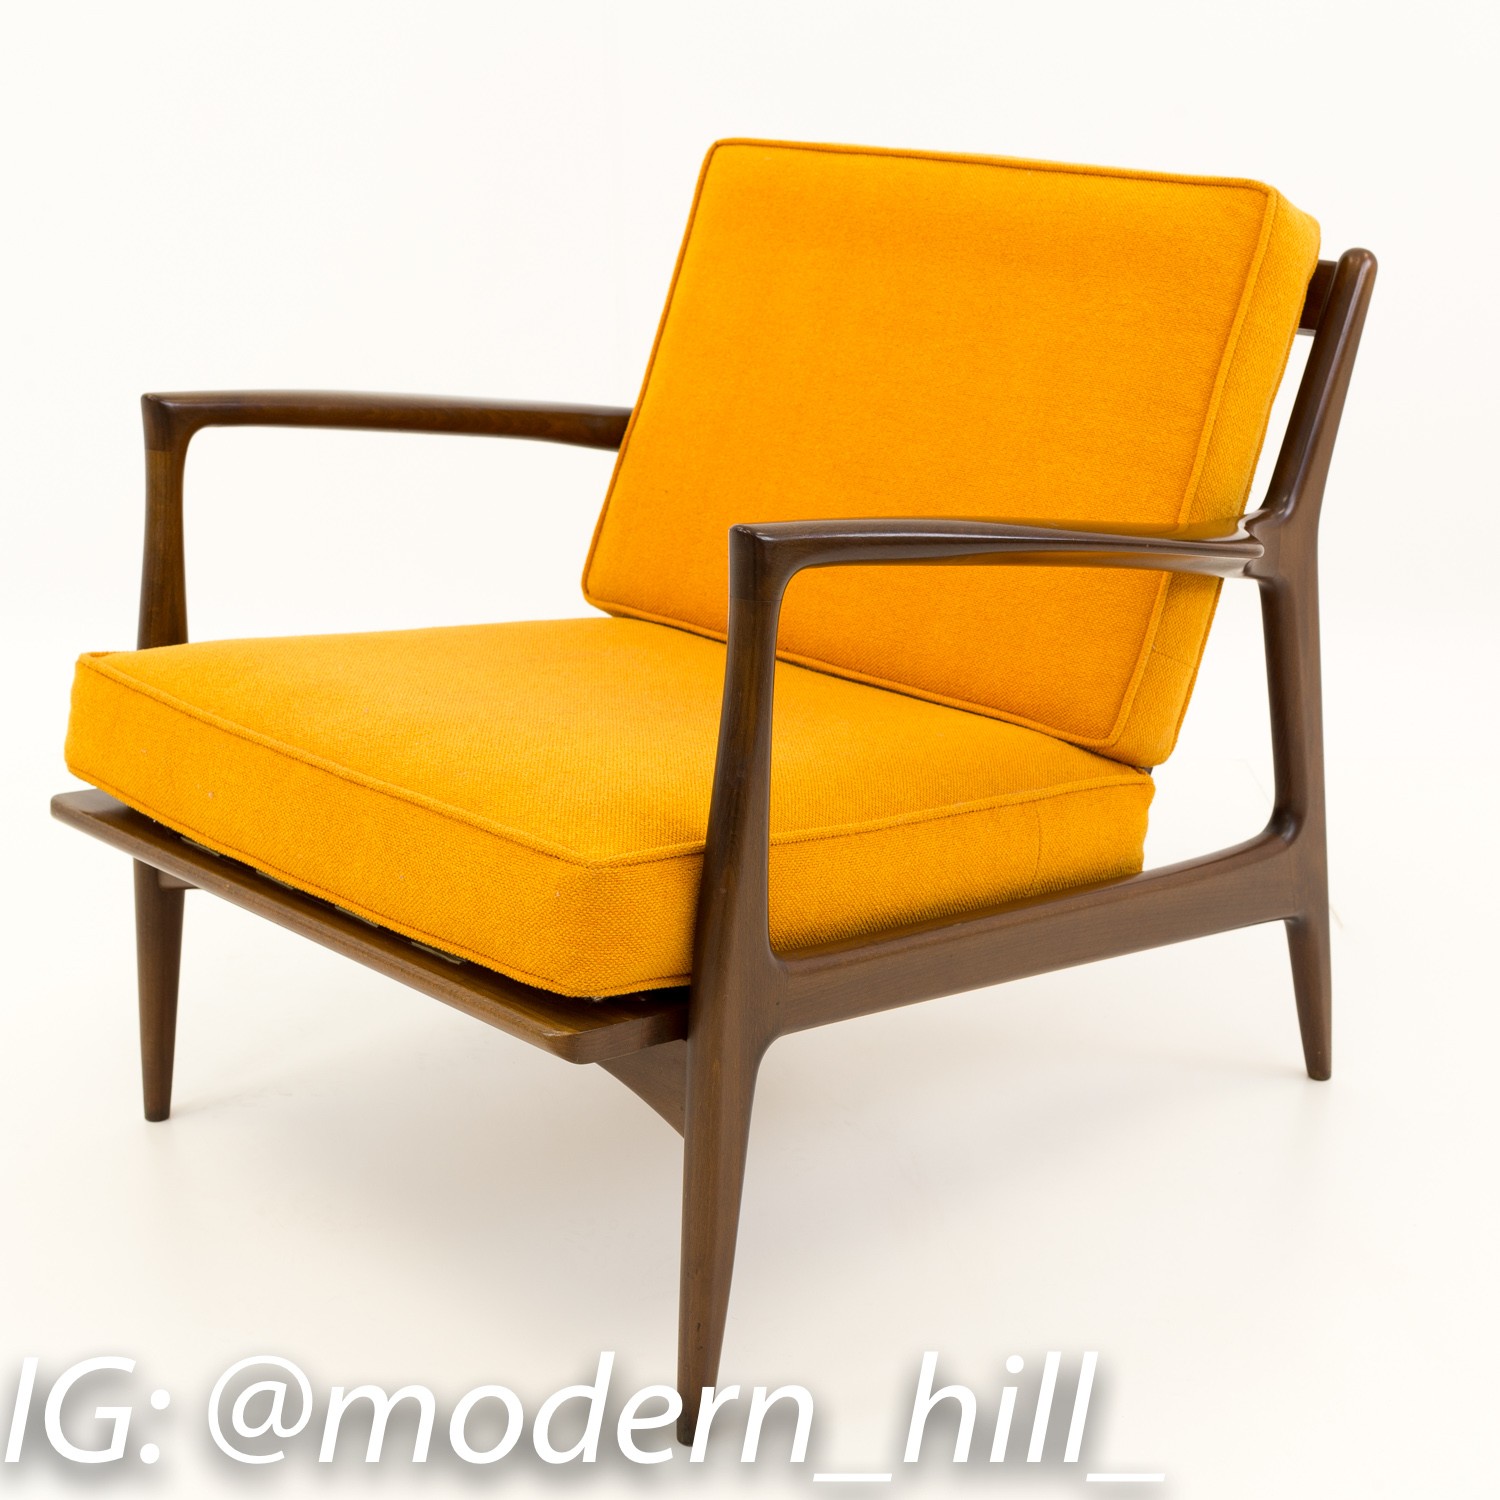 Kofod Larsen for Selig Danish Modern Lounge Chairs - Pair